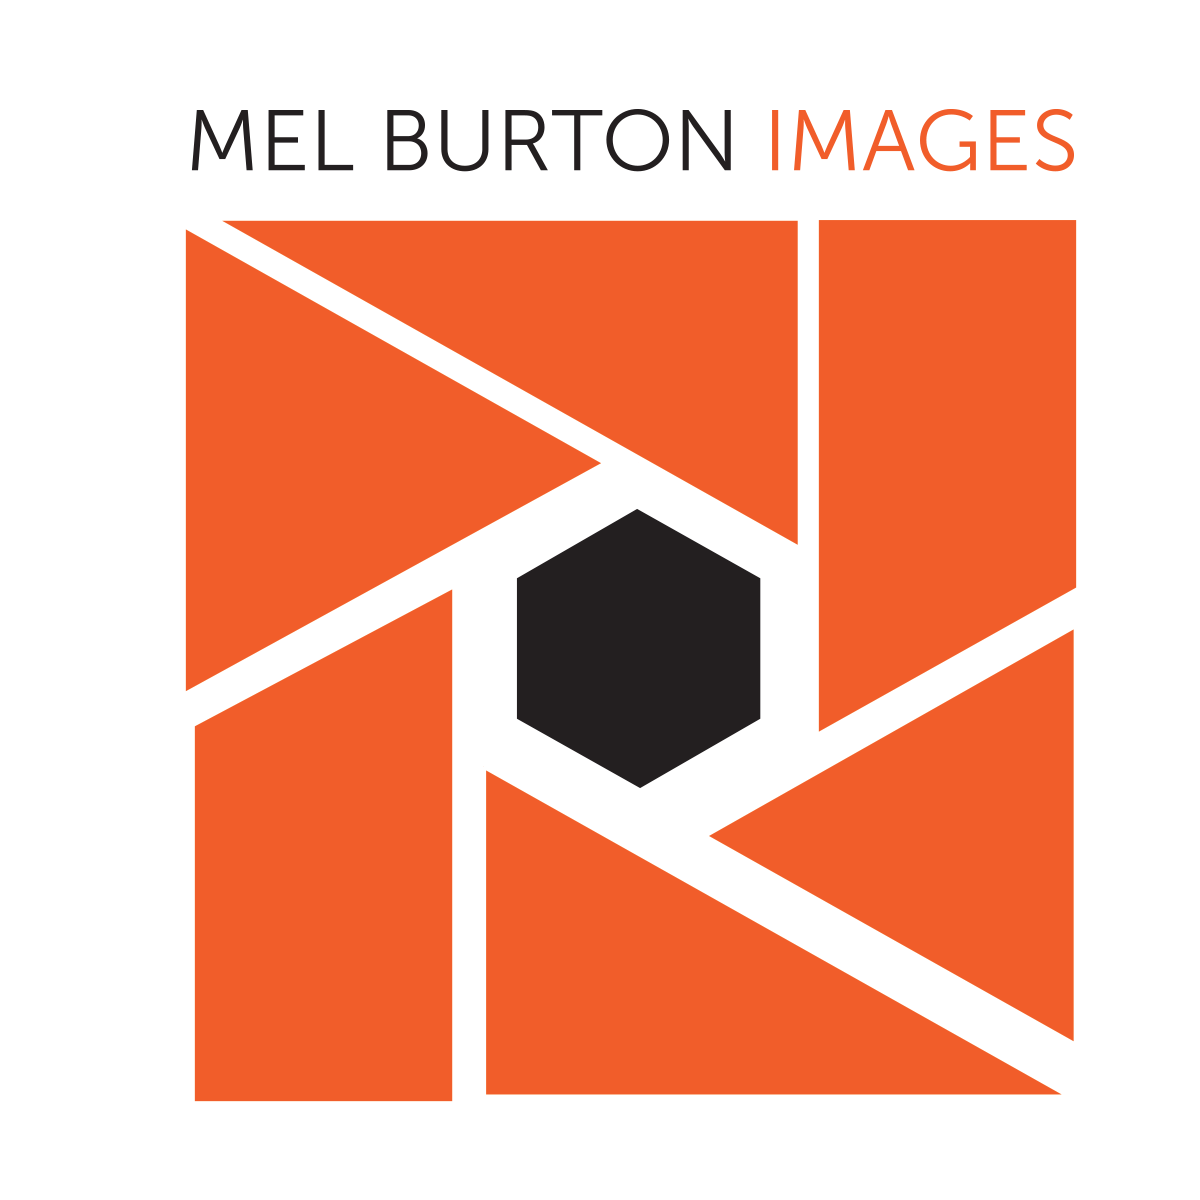 Mel Burton Images